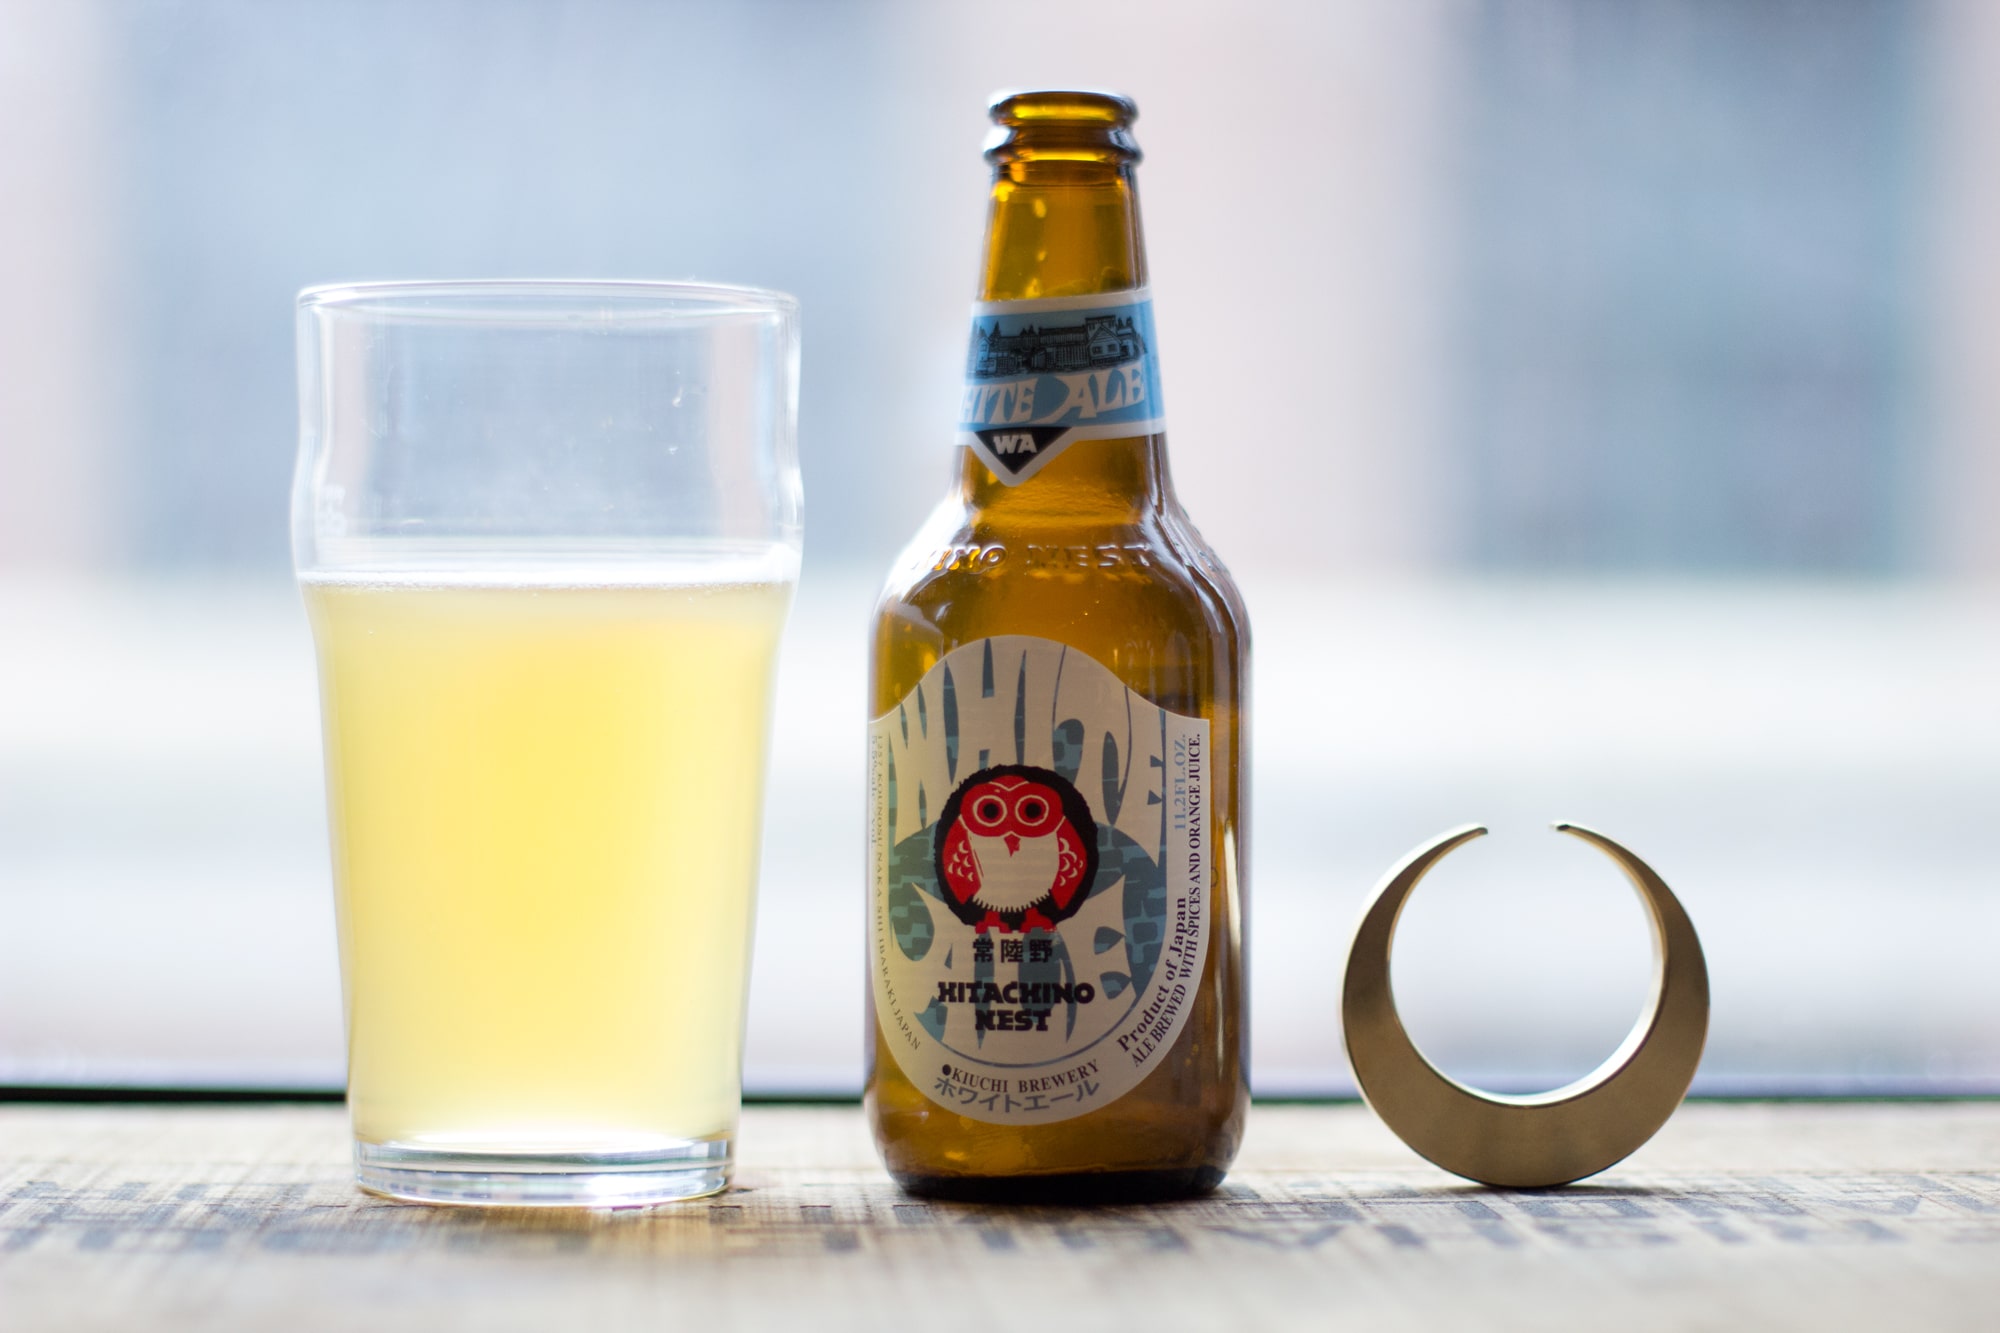 Hitachino Nest Beer: Discovering Premium Japanese Craft Beer